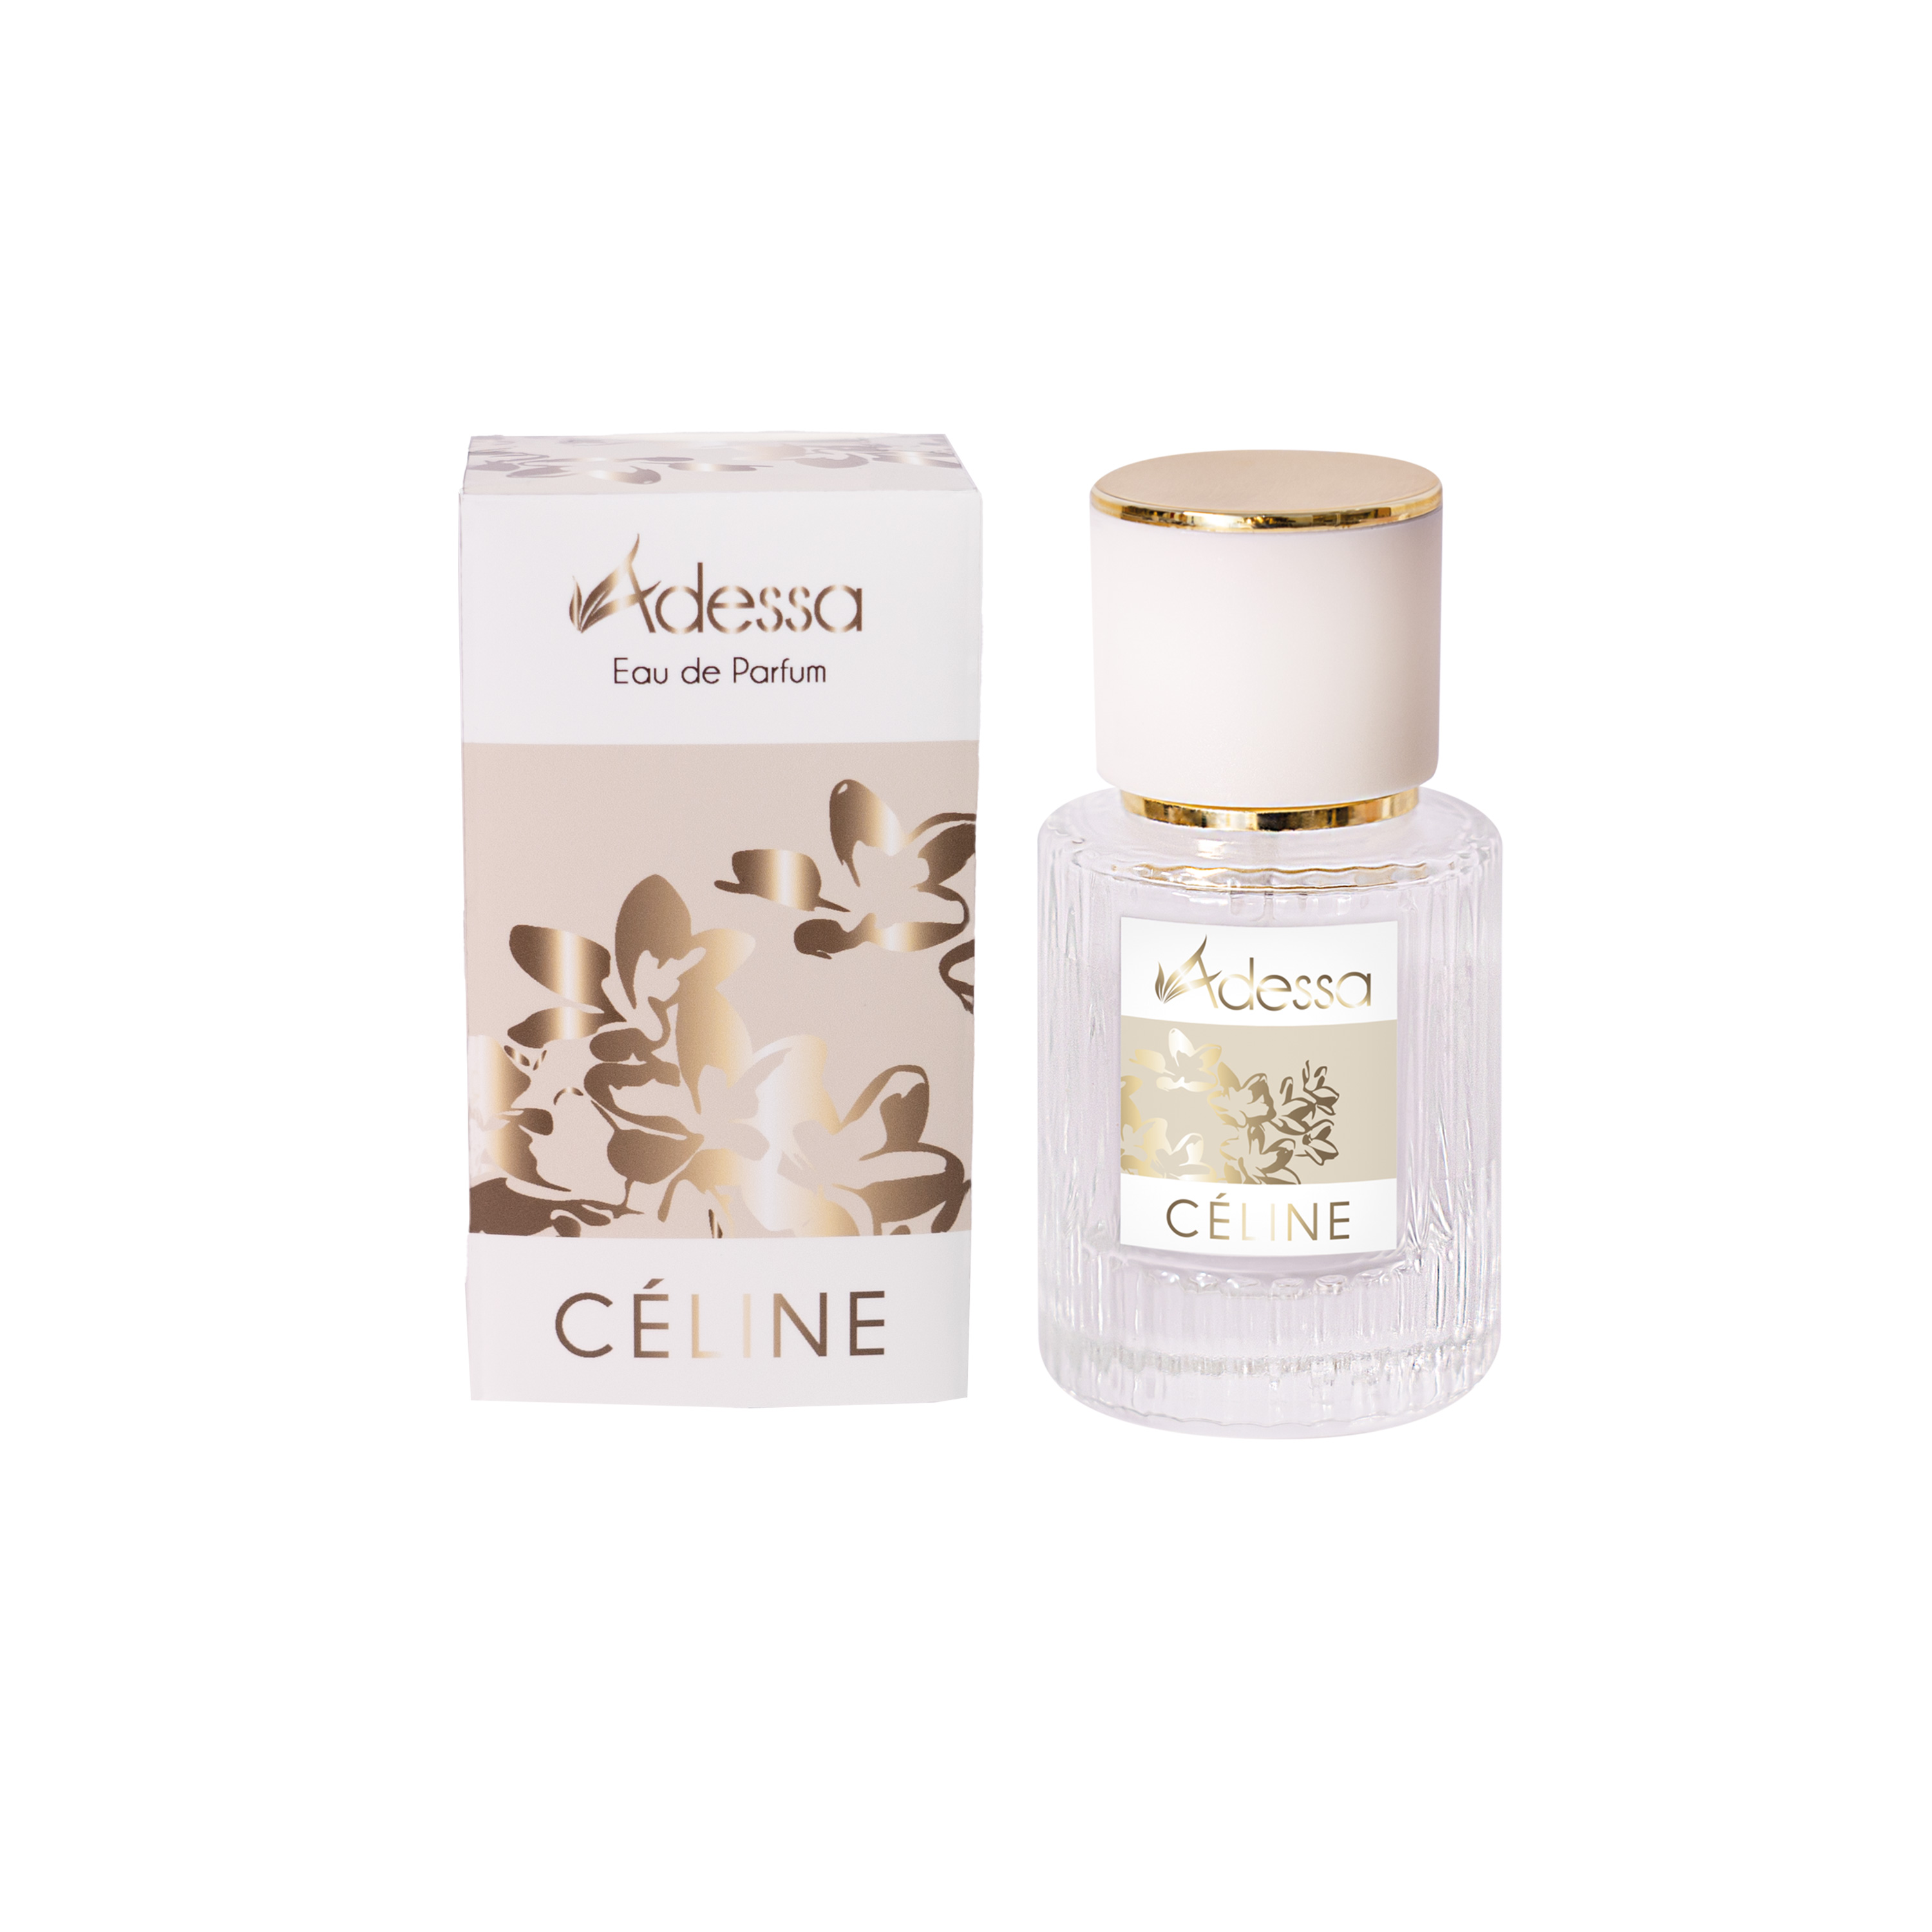 Adessa Eau de Parfum céline, 30 ml